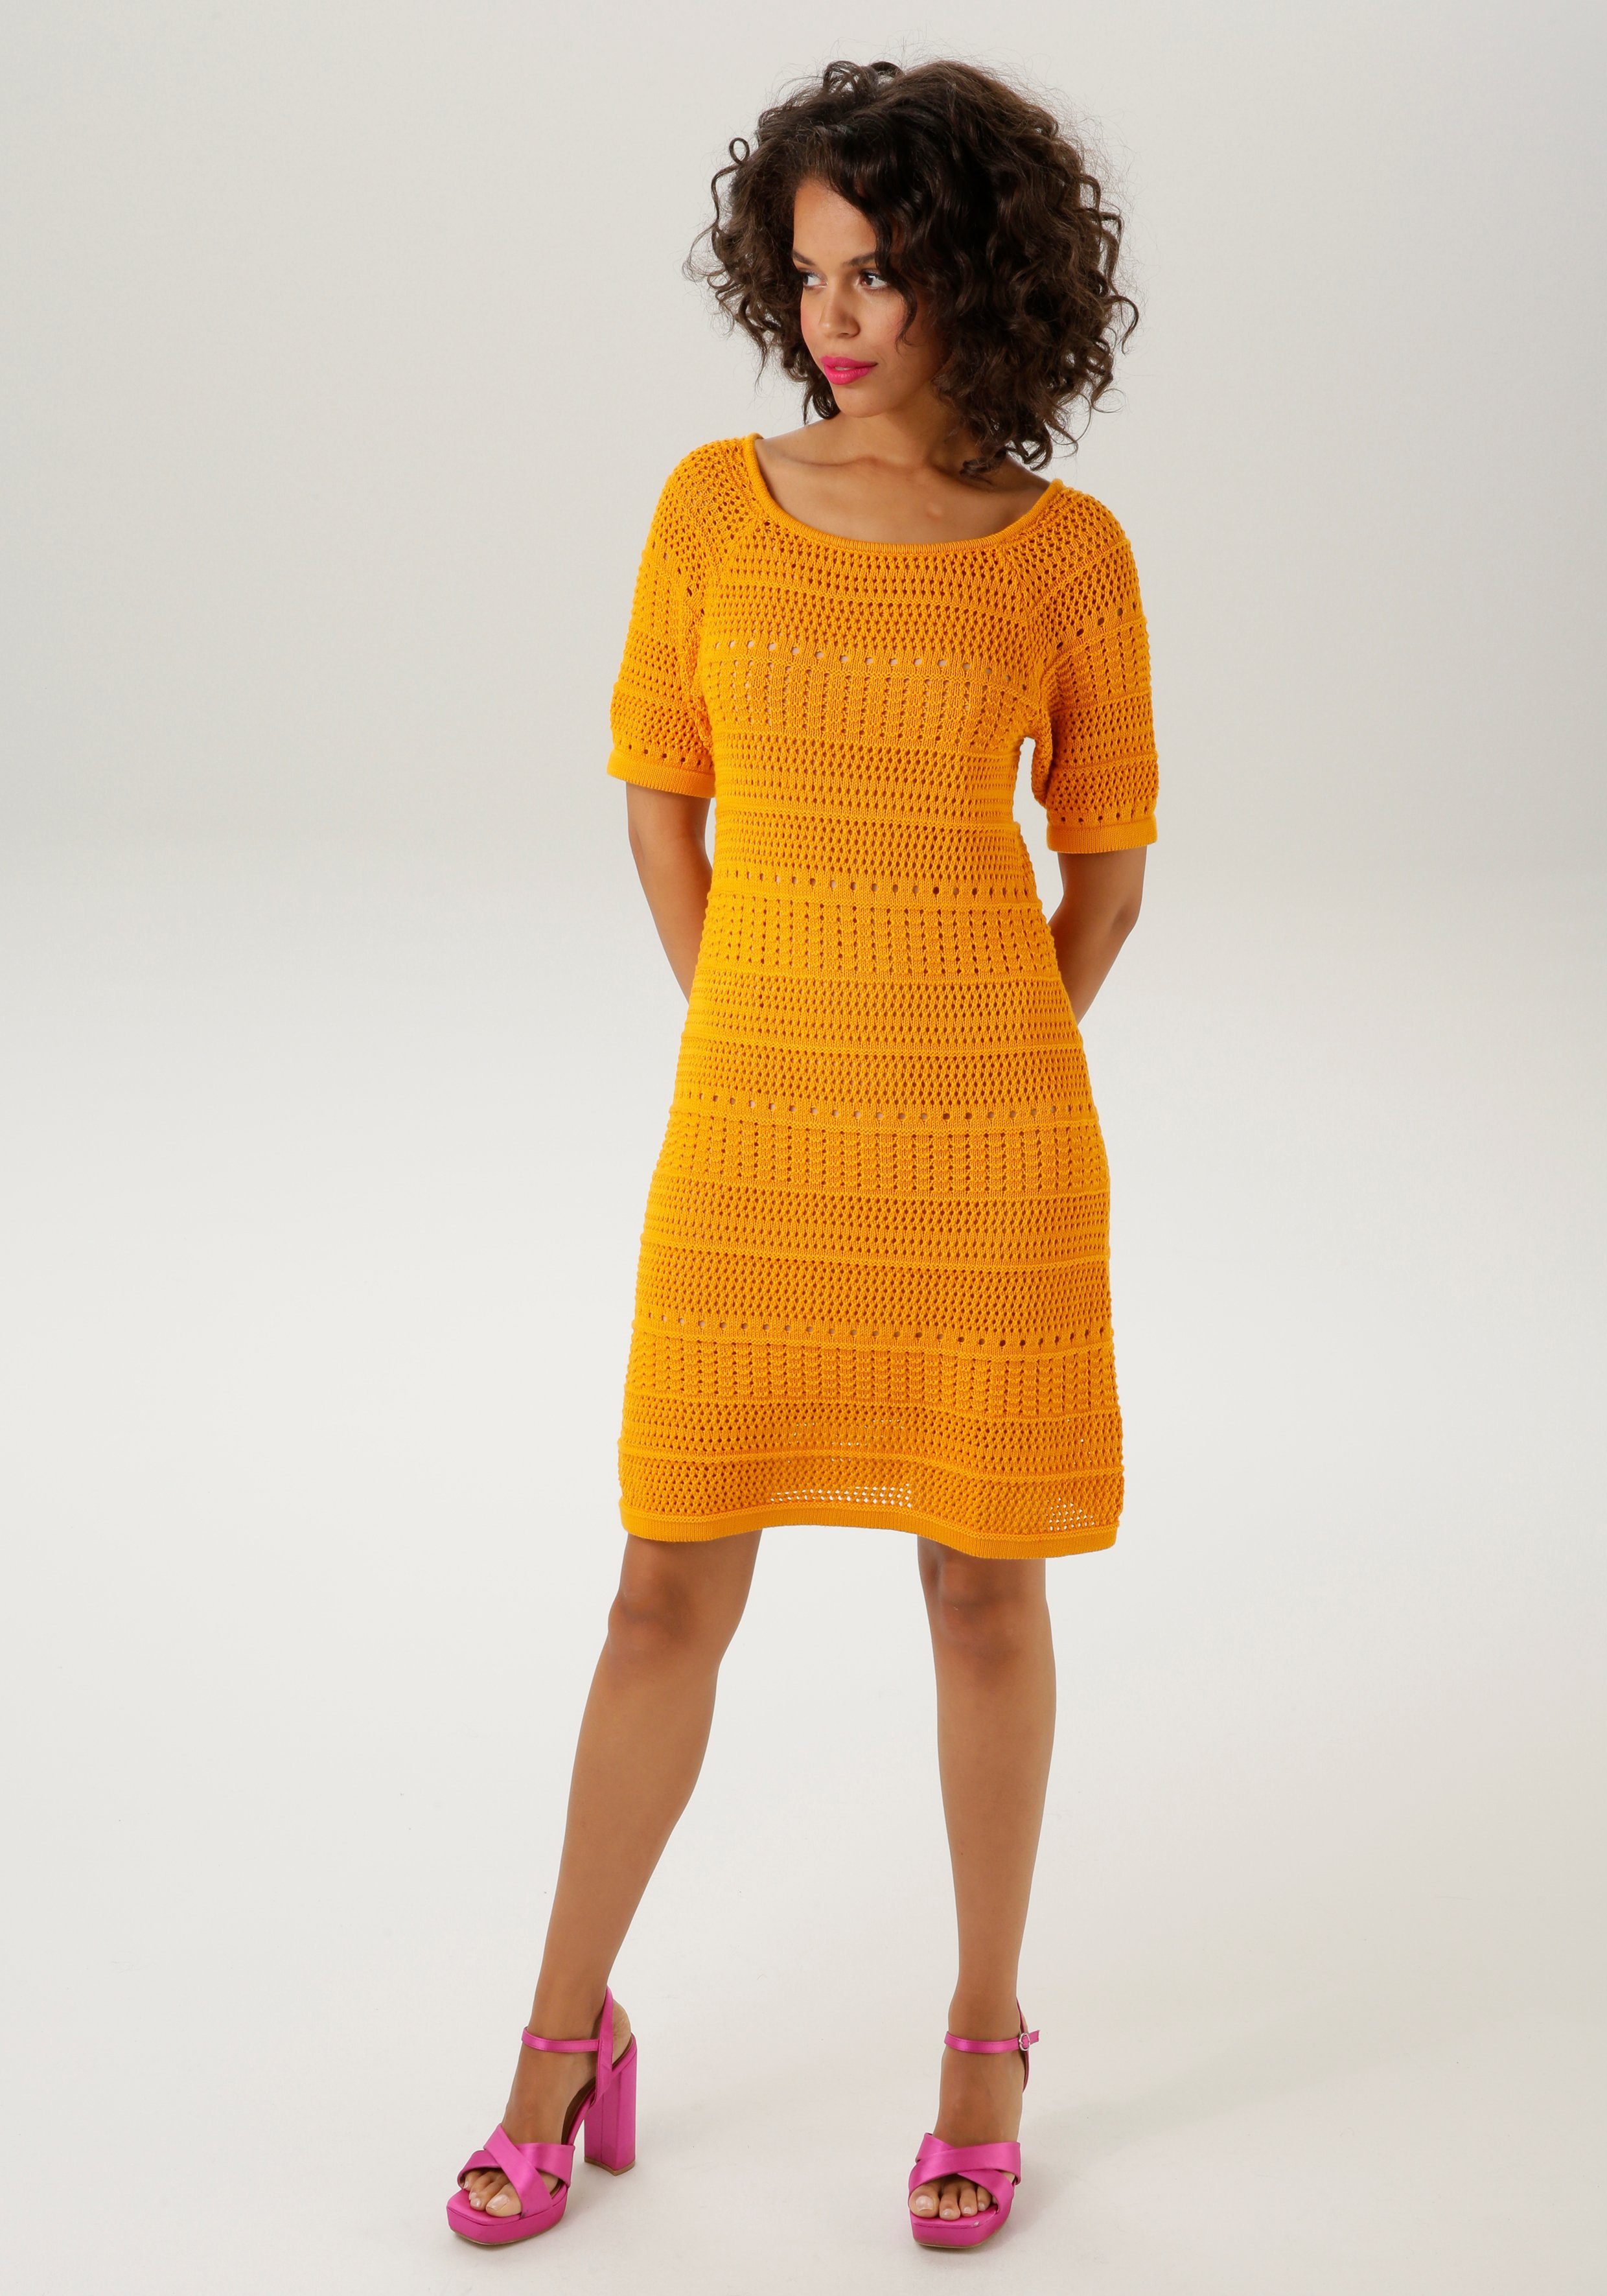 aniston casual gebreide jurk in ajourmotief-mix - nieuwe collectie oranje